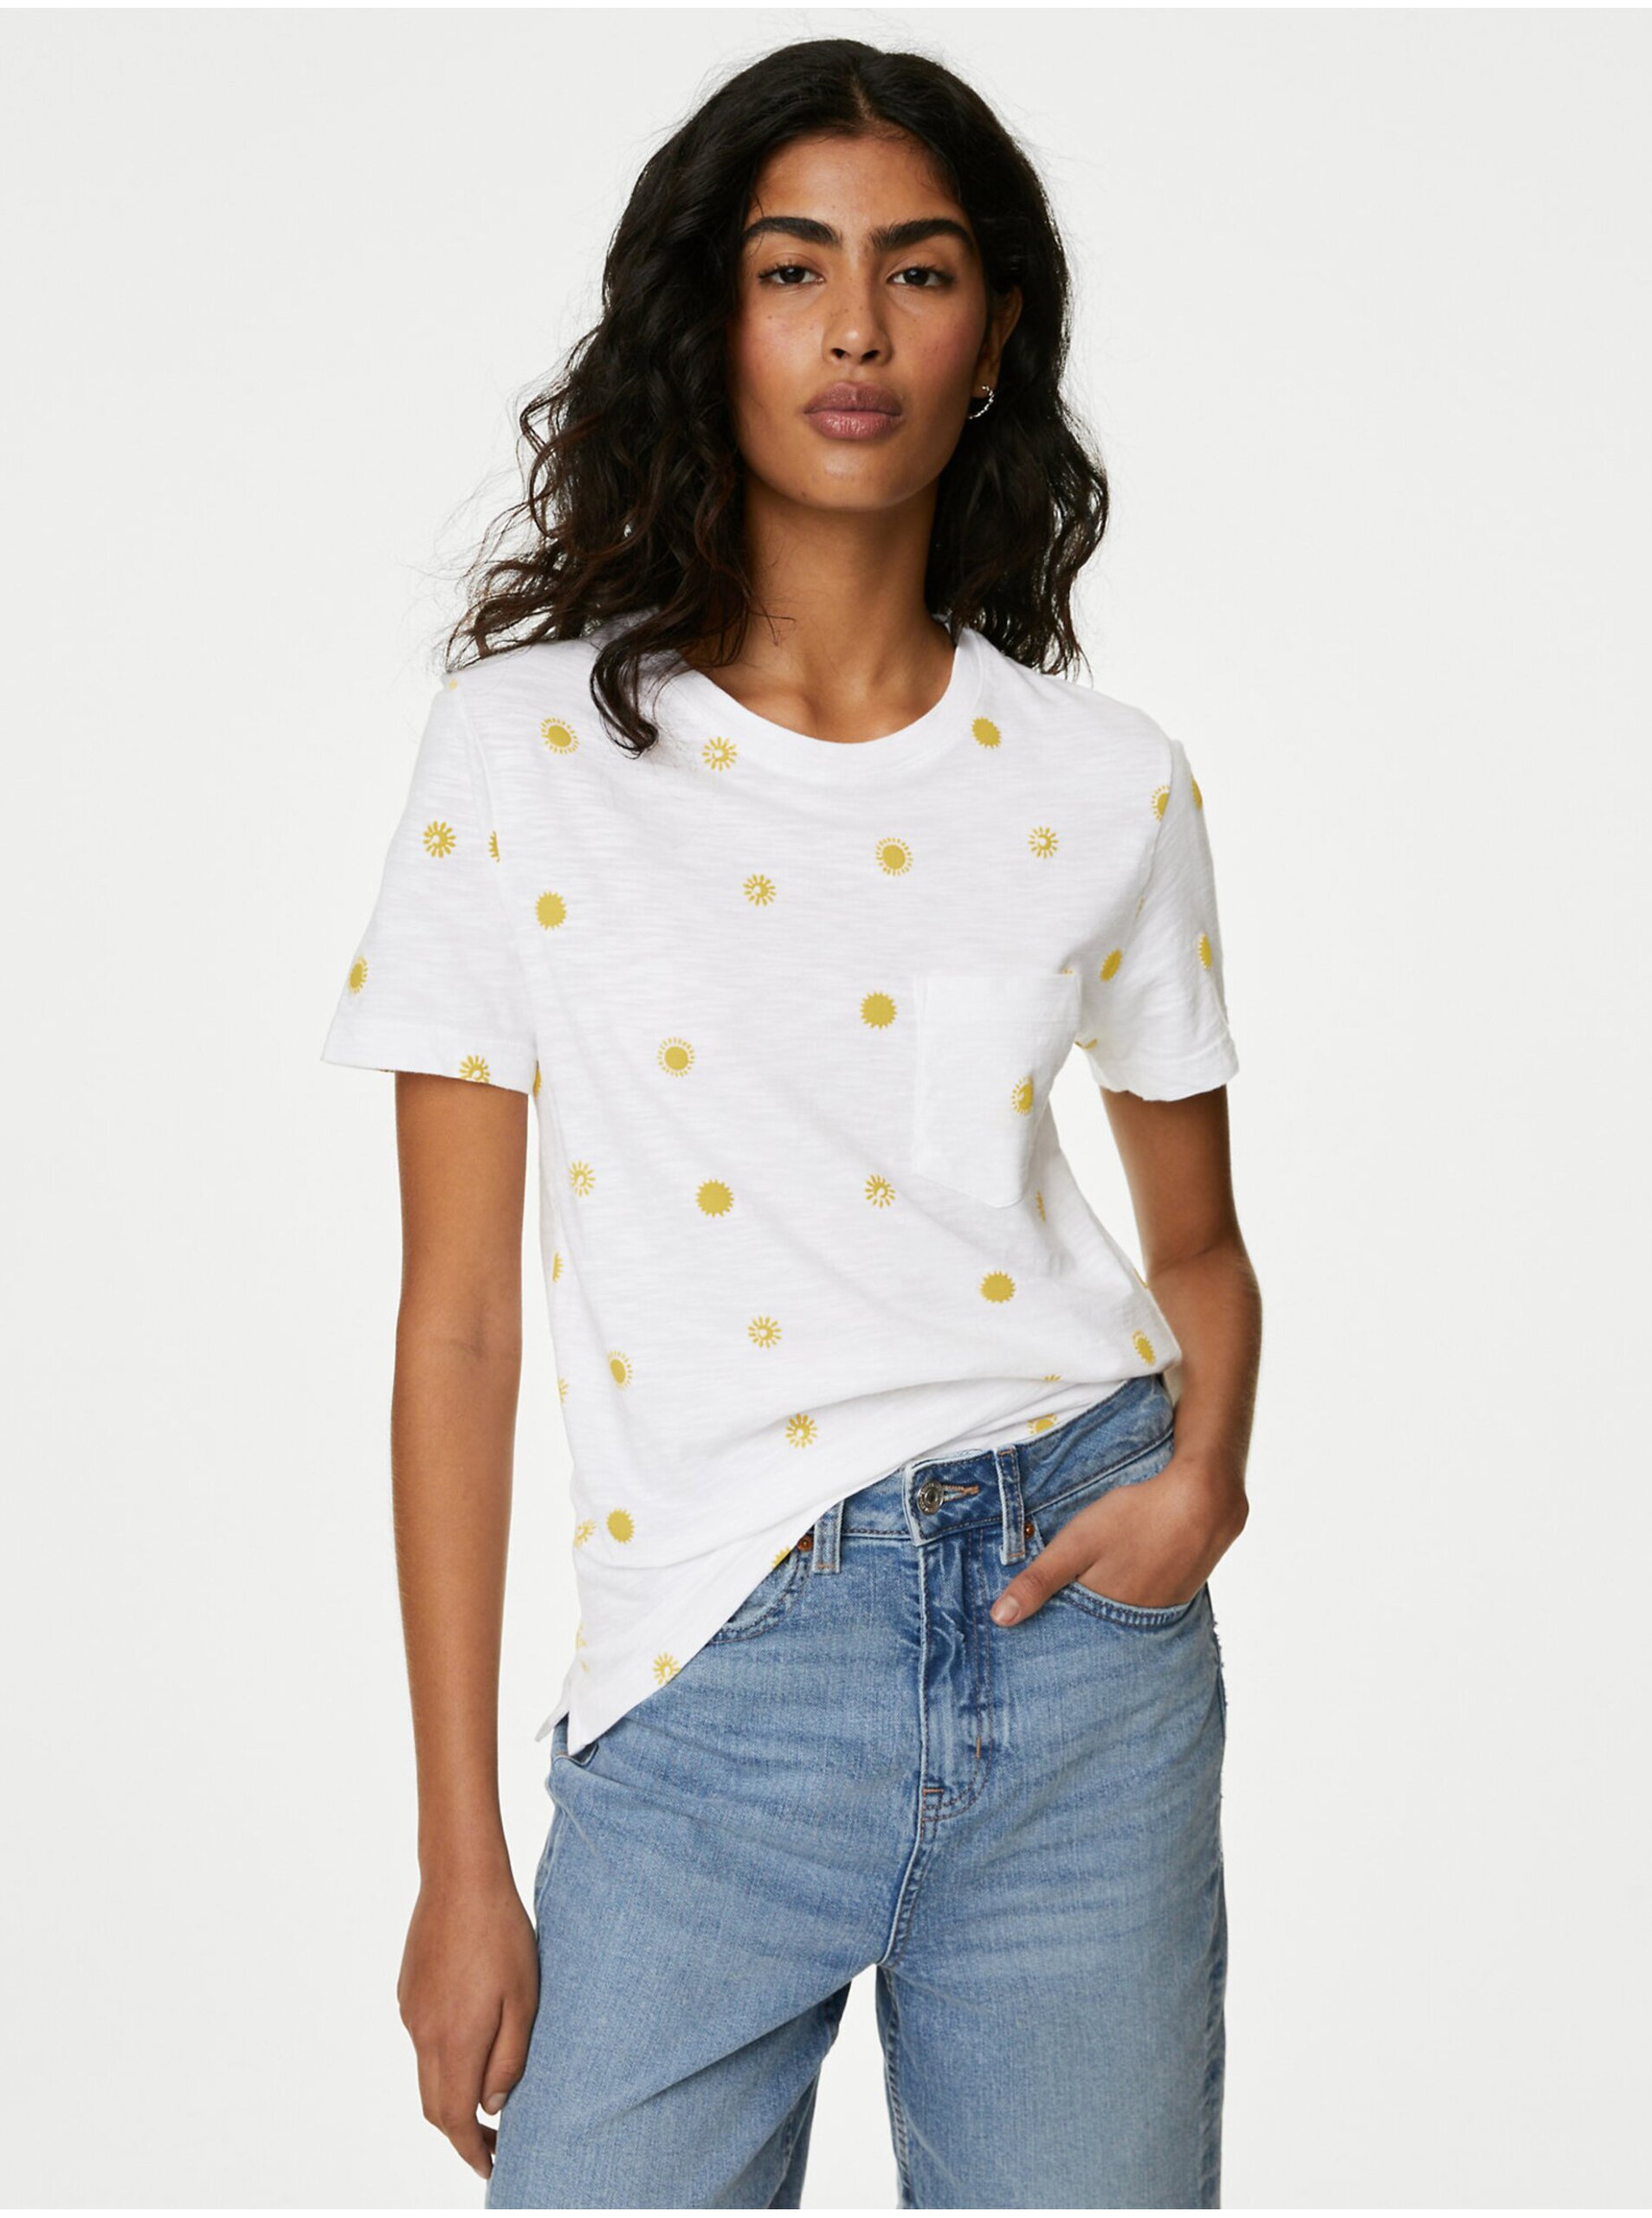 E-shop Bílé dámské vzorované tričko s kapsičkou Marks & Spencer